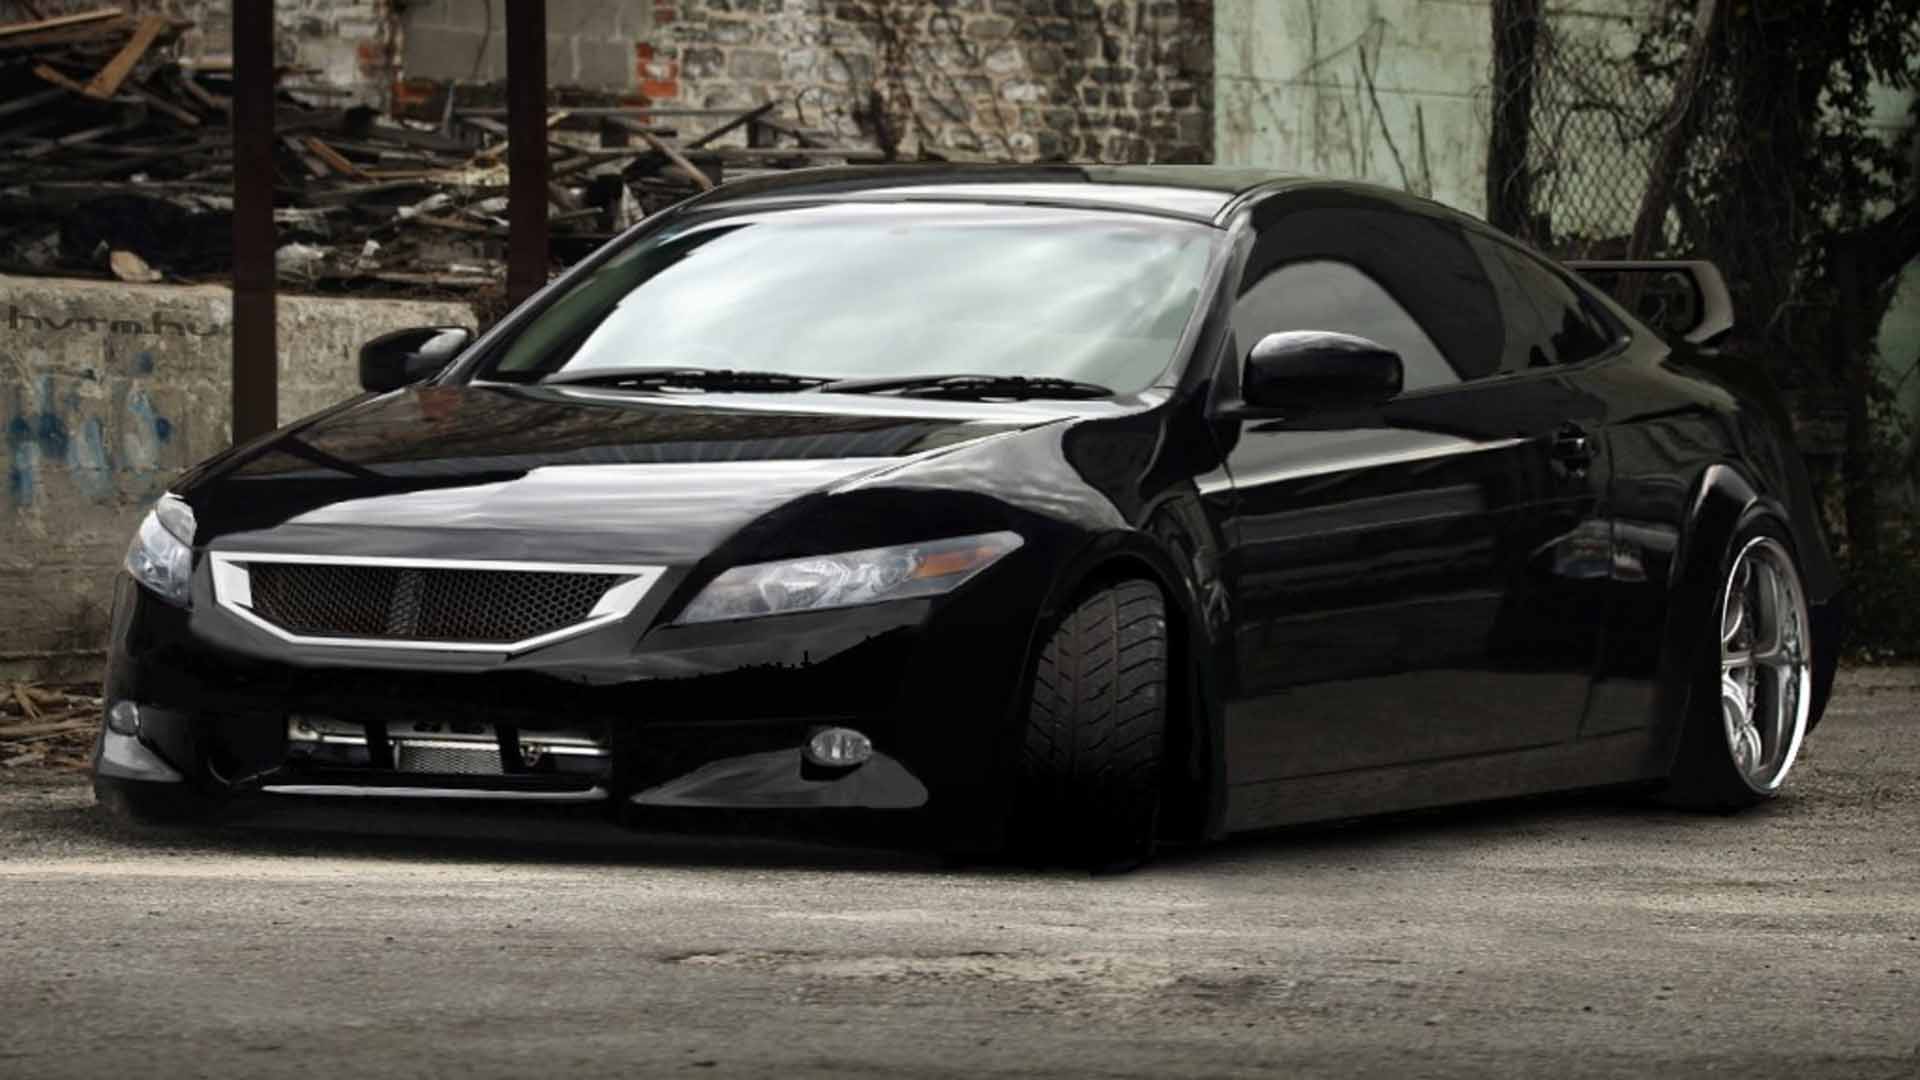 Black Honda Civic Wallpaper HD In Cars Imageci